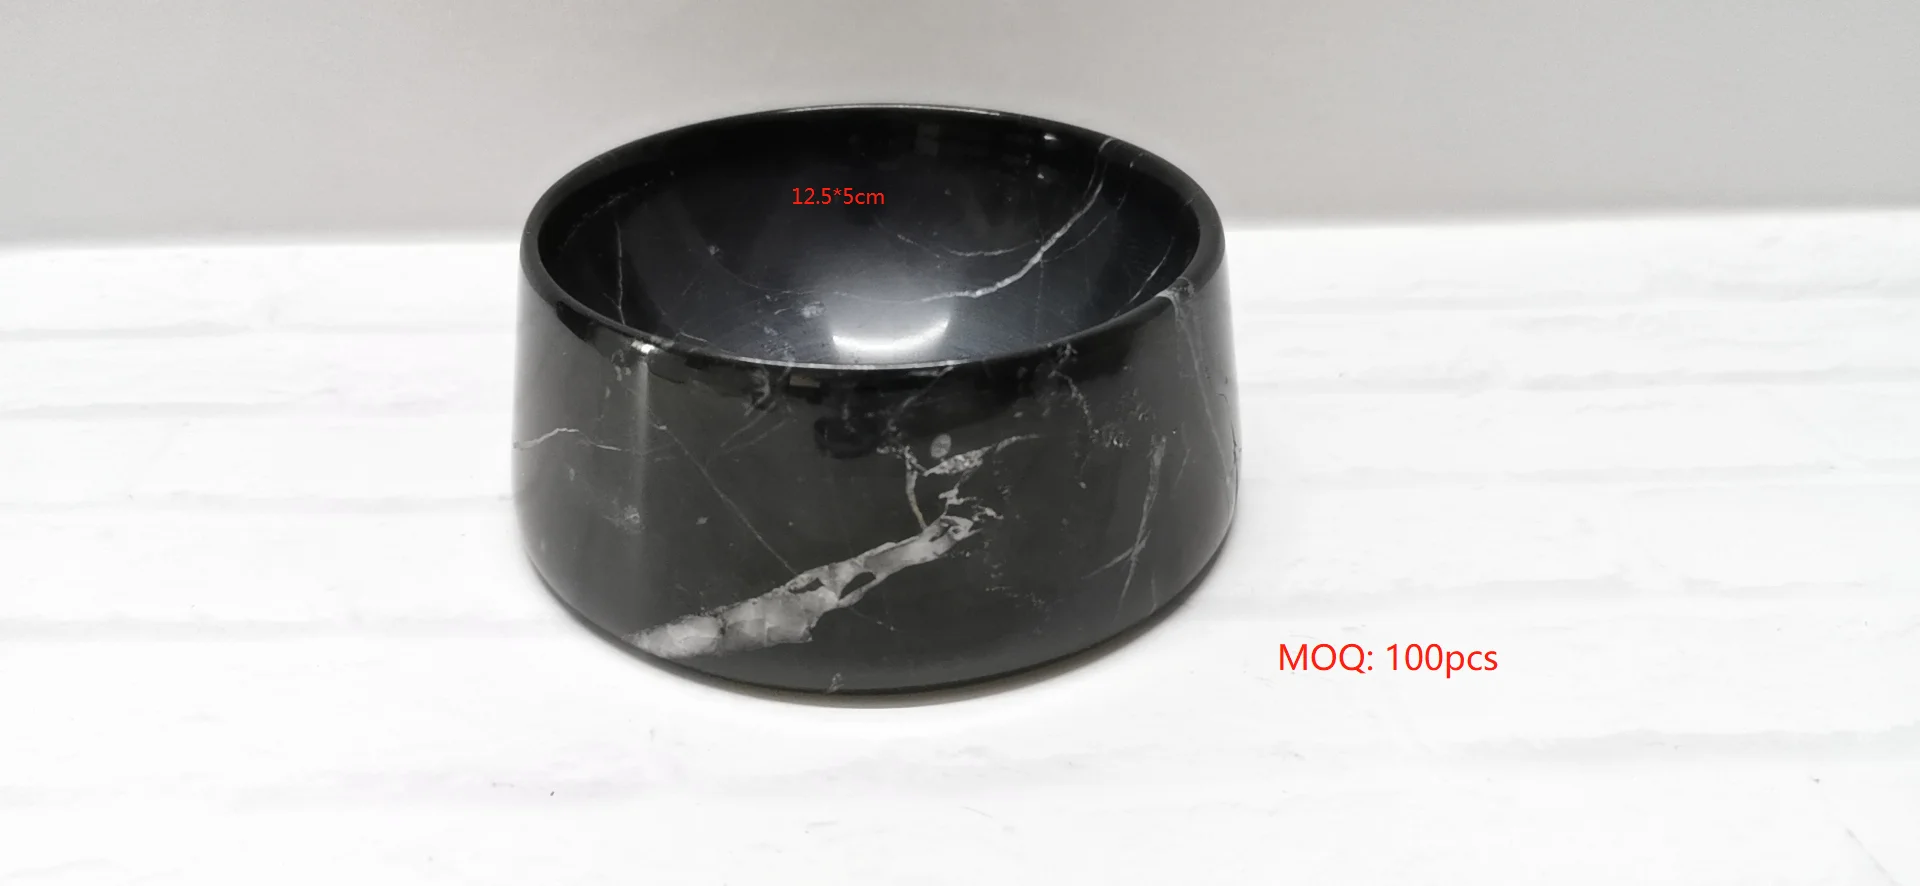 marble pet bowl